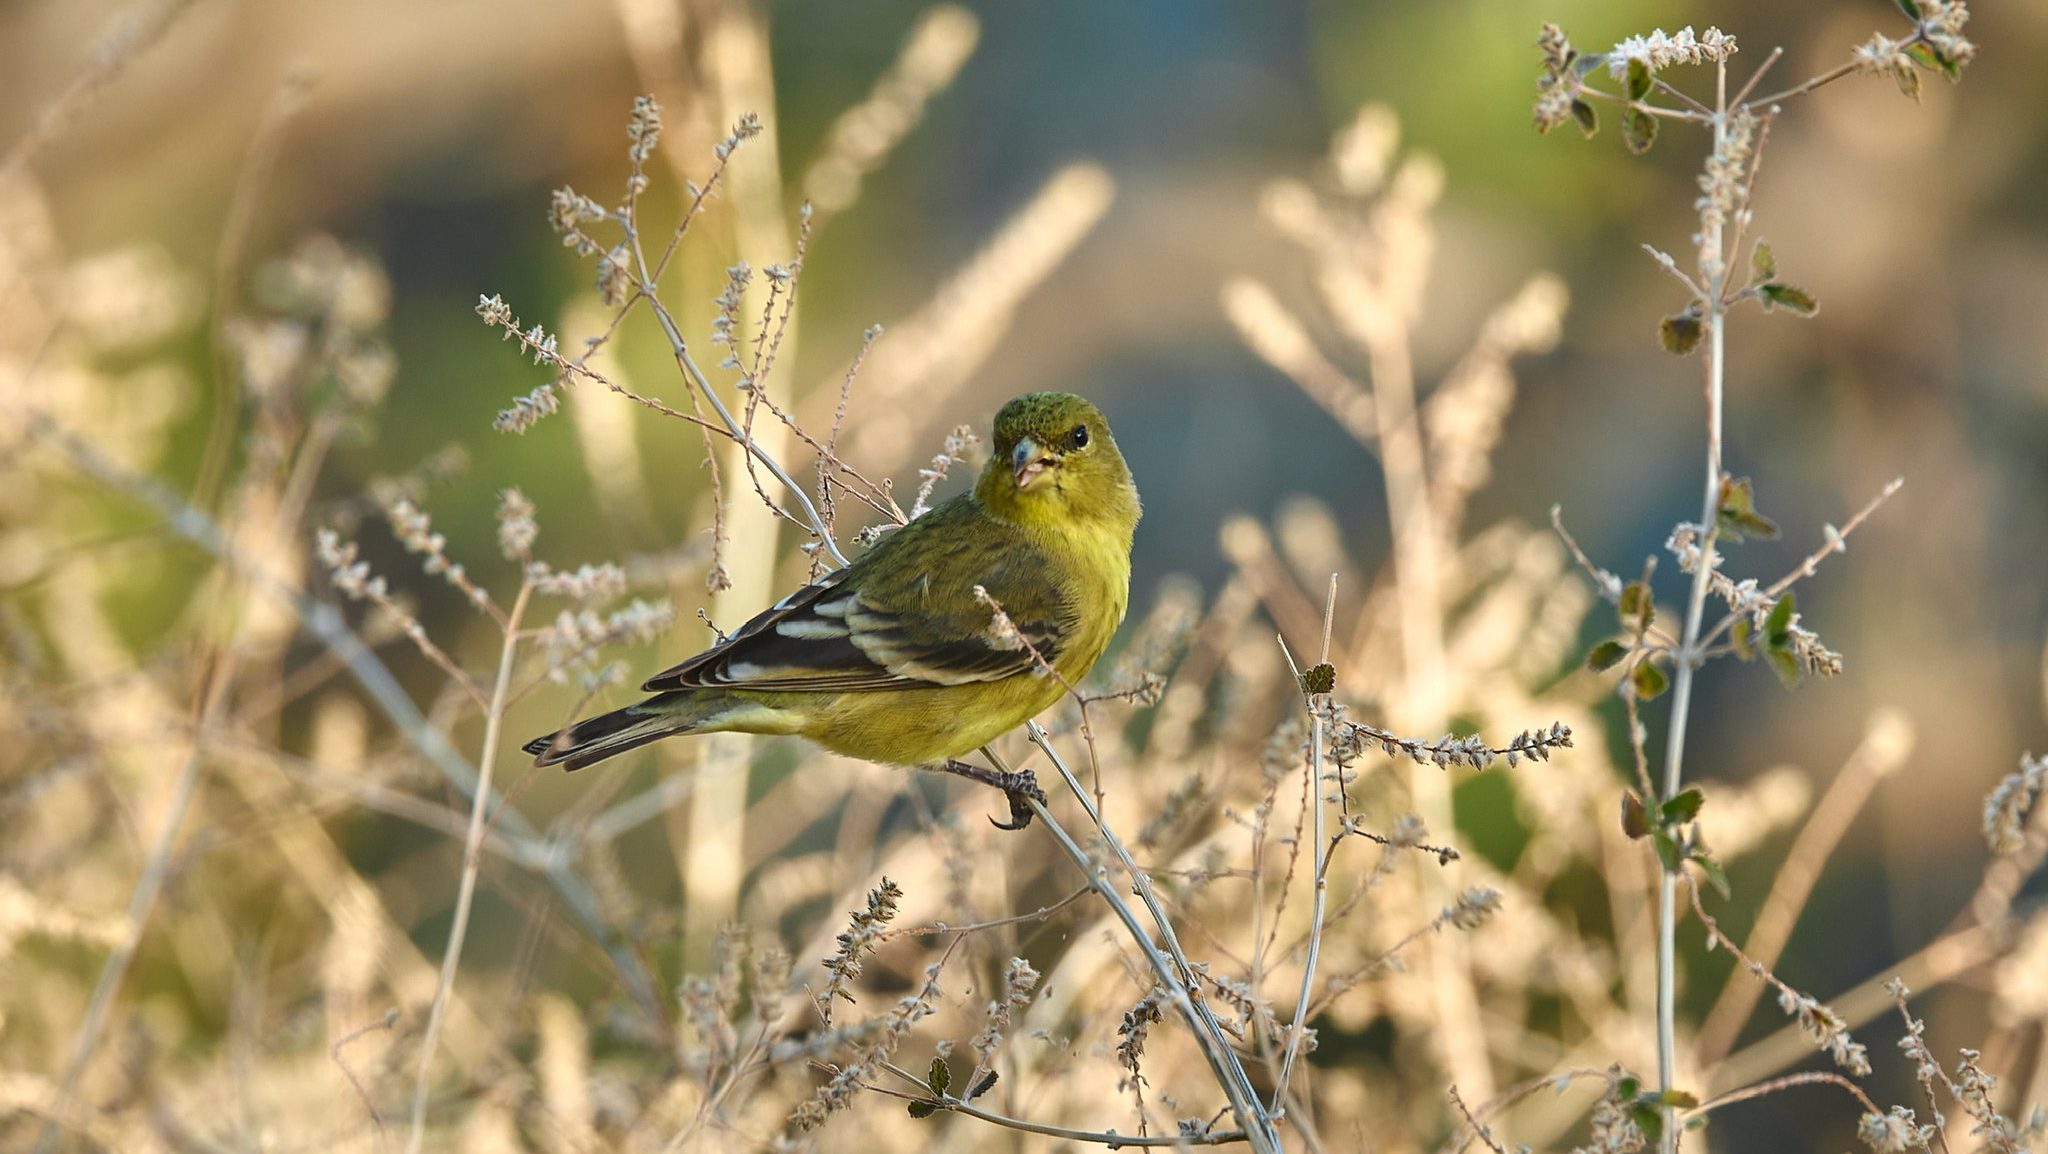 small olive green bird on dead vegetation